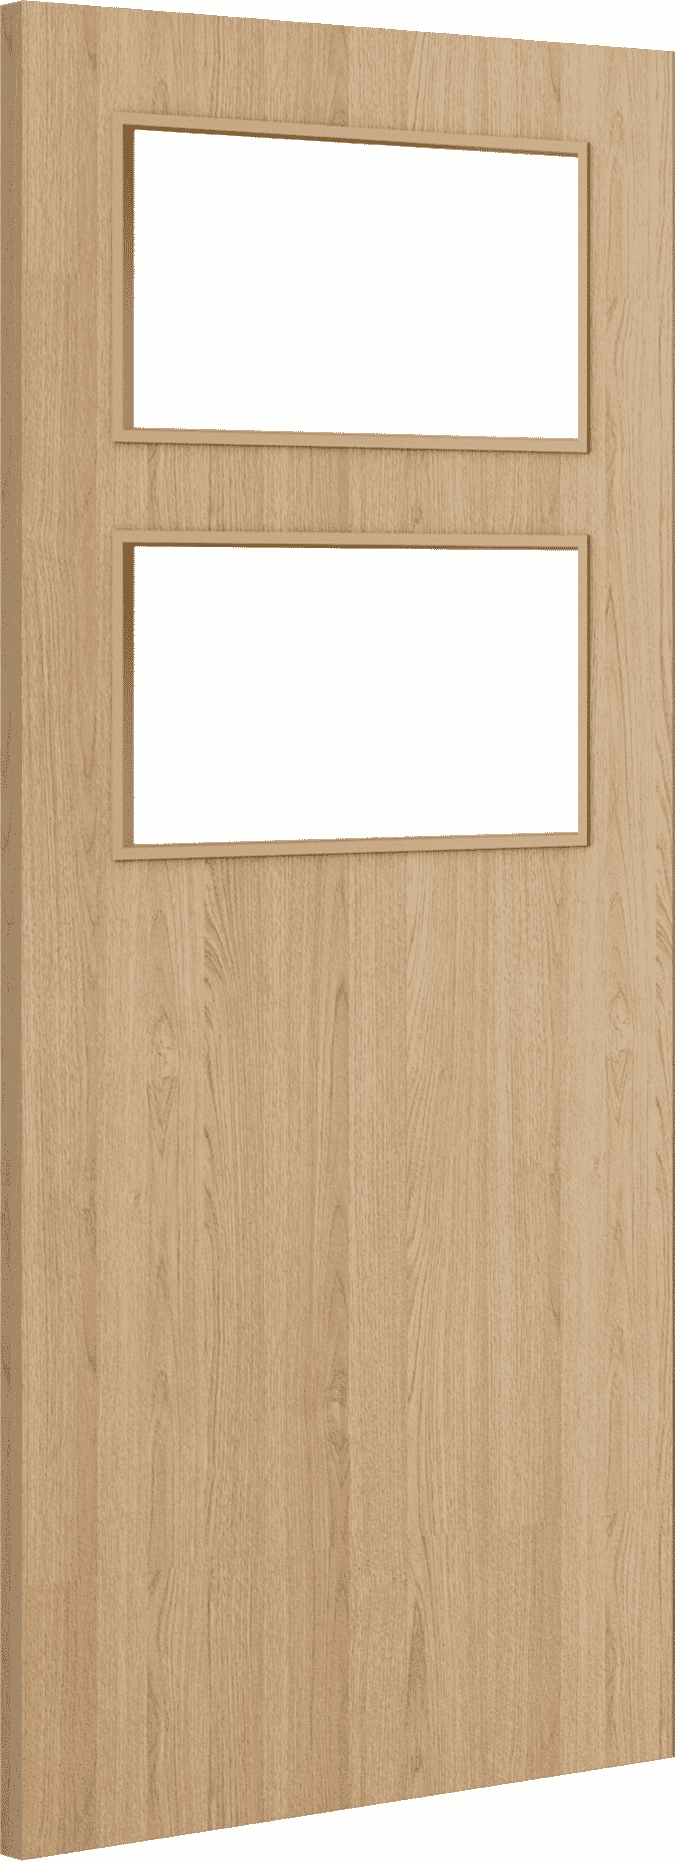 1981mm x 686mm x 44mm (27") Architectural Oak 02 Frosted Glazed - Prefinished FD30 Fire Door Blank